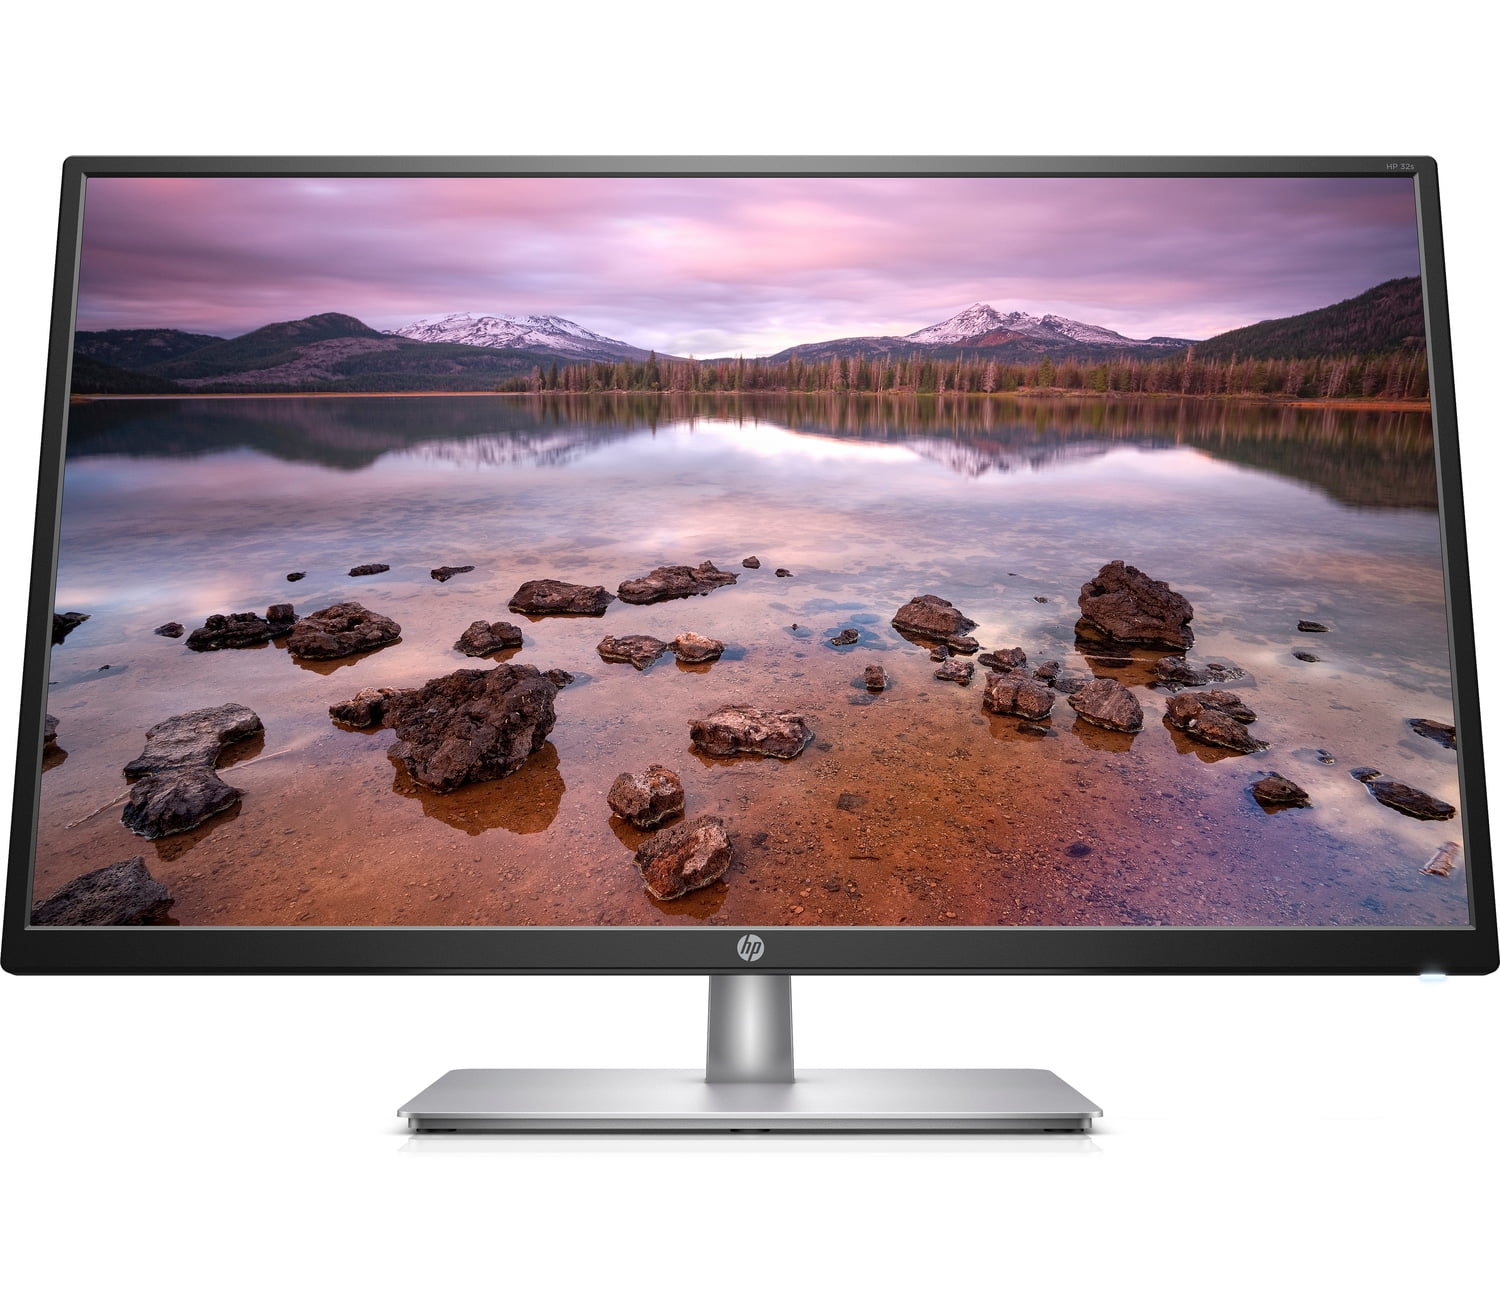 Hewlett Packard Hp 27m 27-inch Monitor - Walmart.com